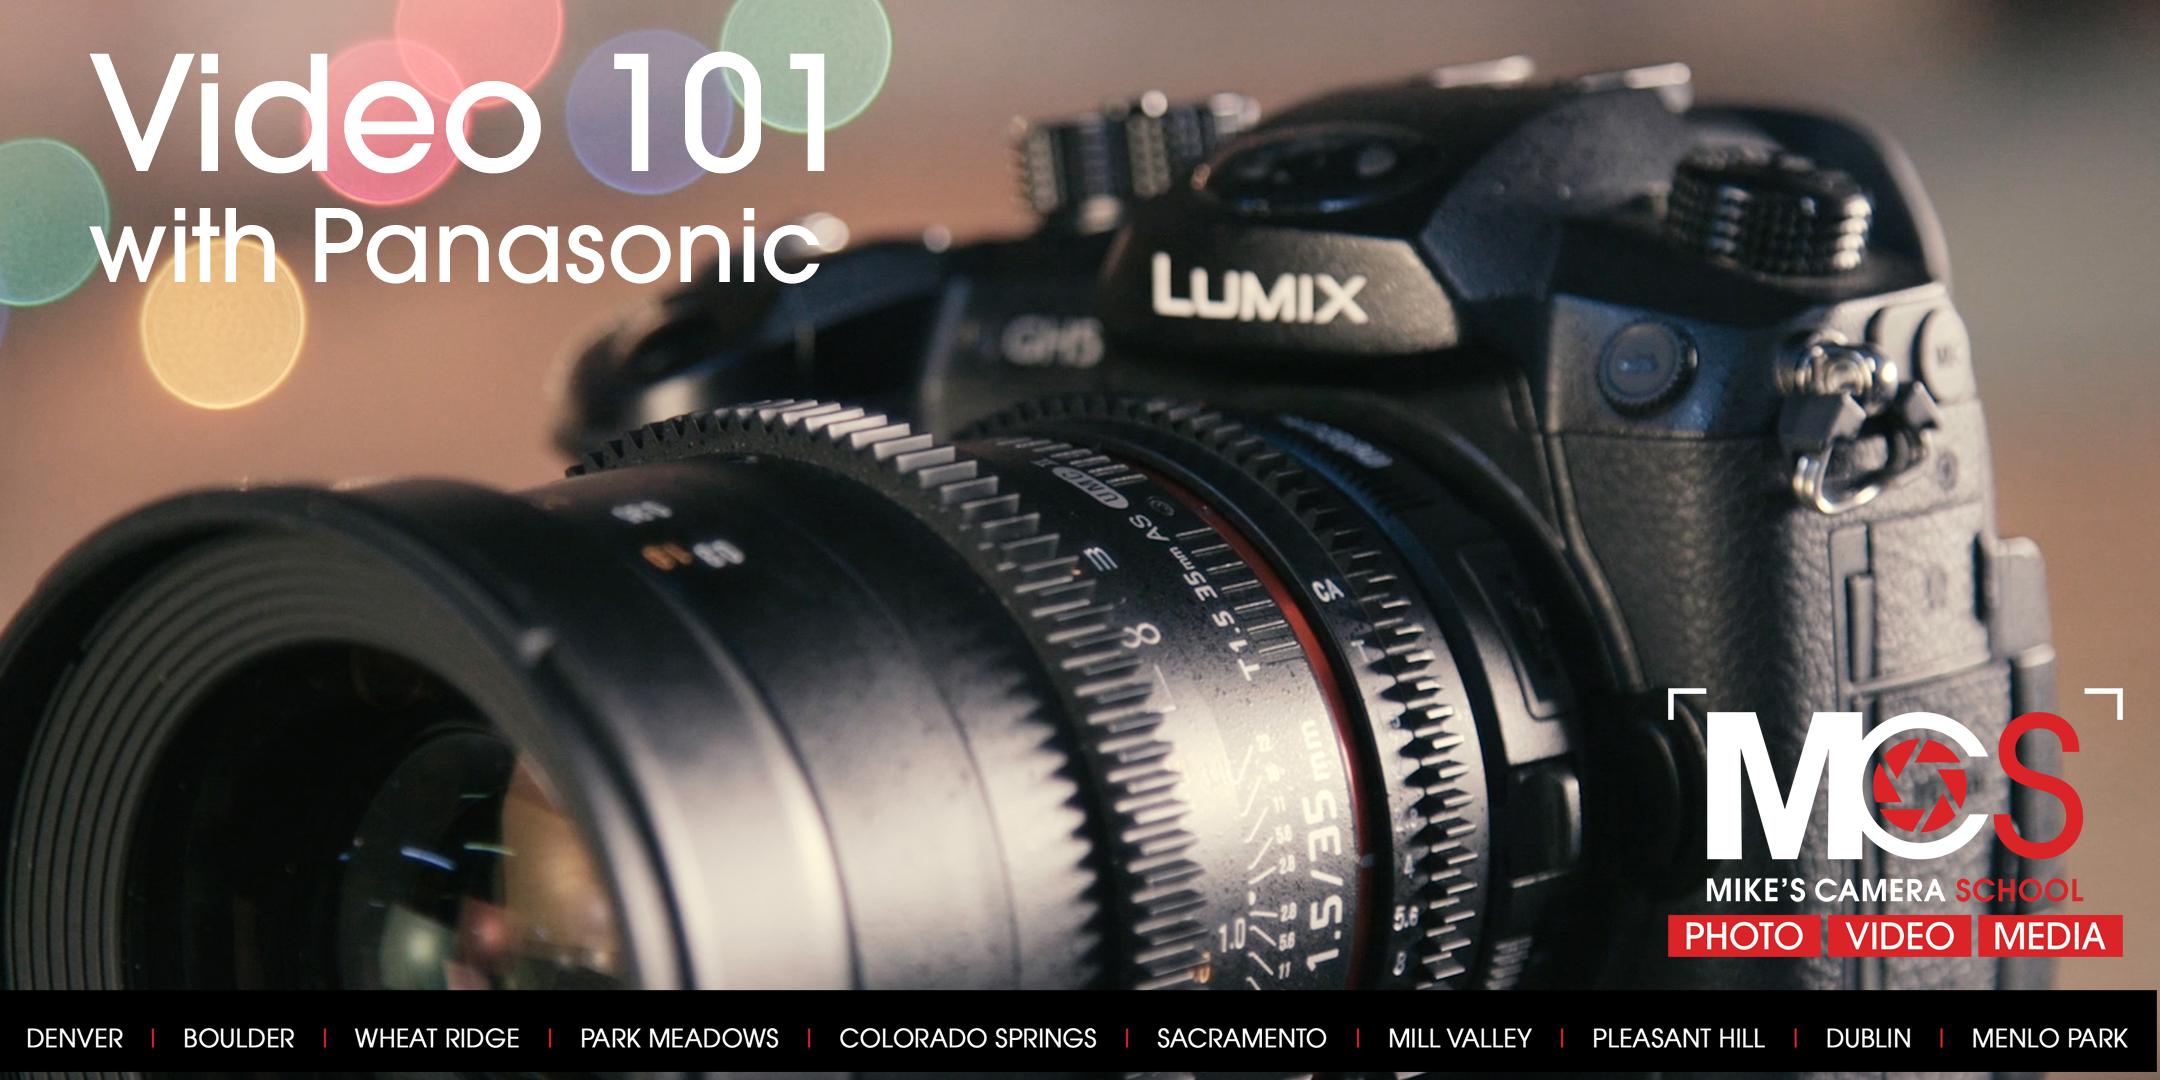 Video 101 with Panasonic - Boulder